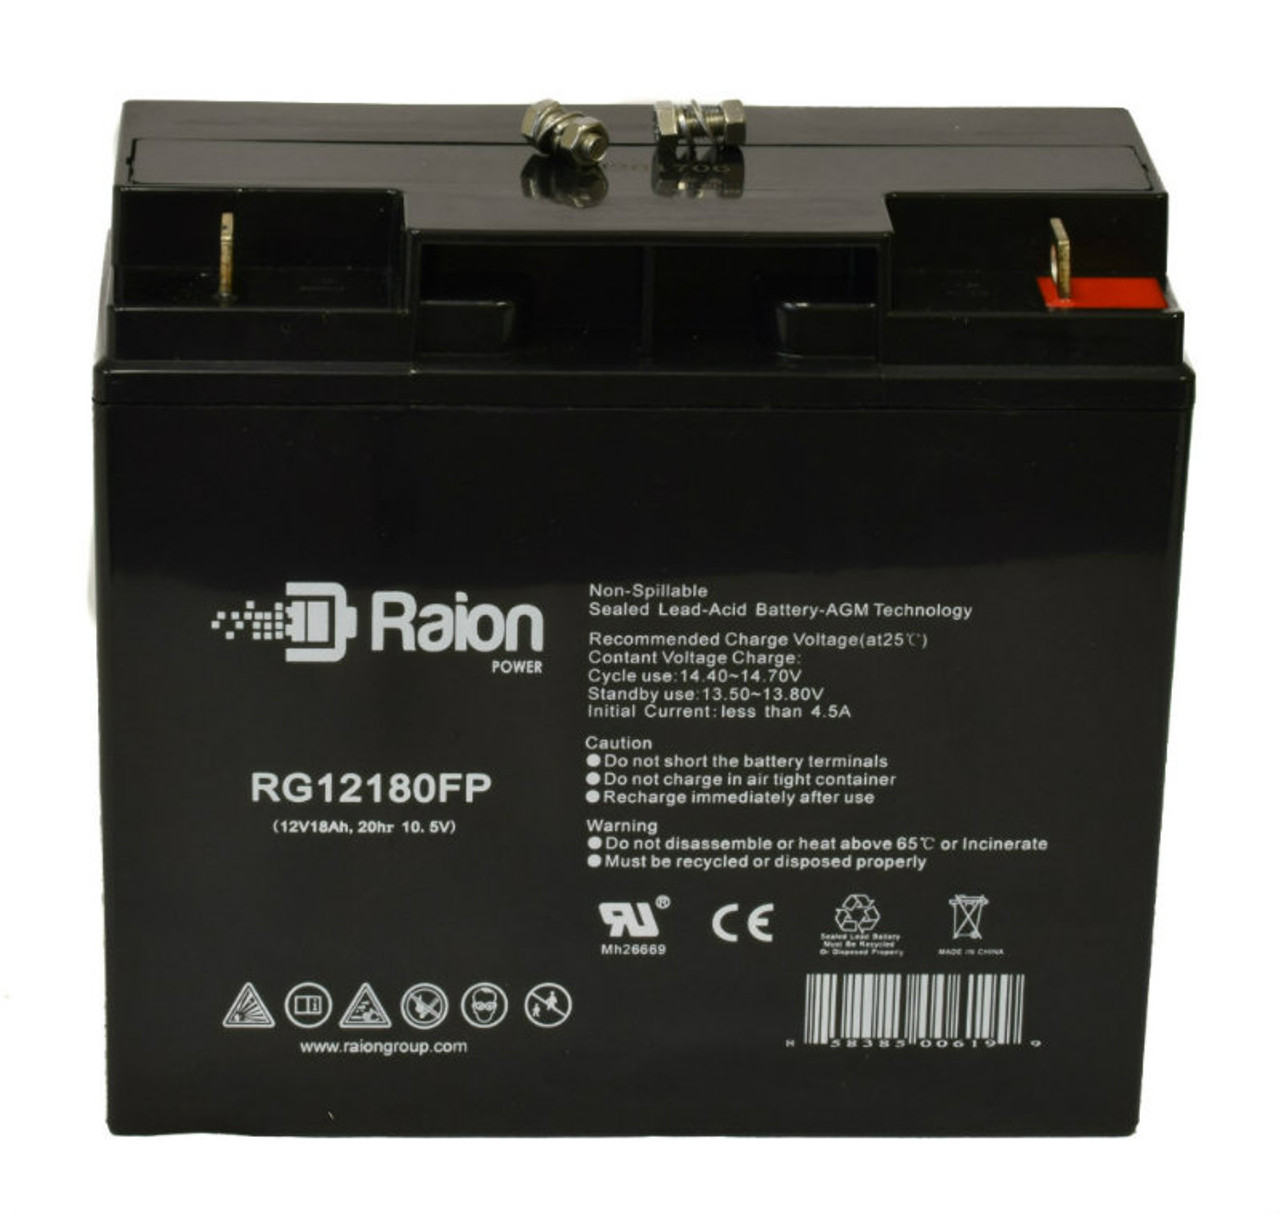 Raion Power RG12180FP 12V 18Ah Lead Acid Battery for Energenie BAT-12V17AH